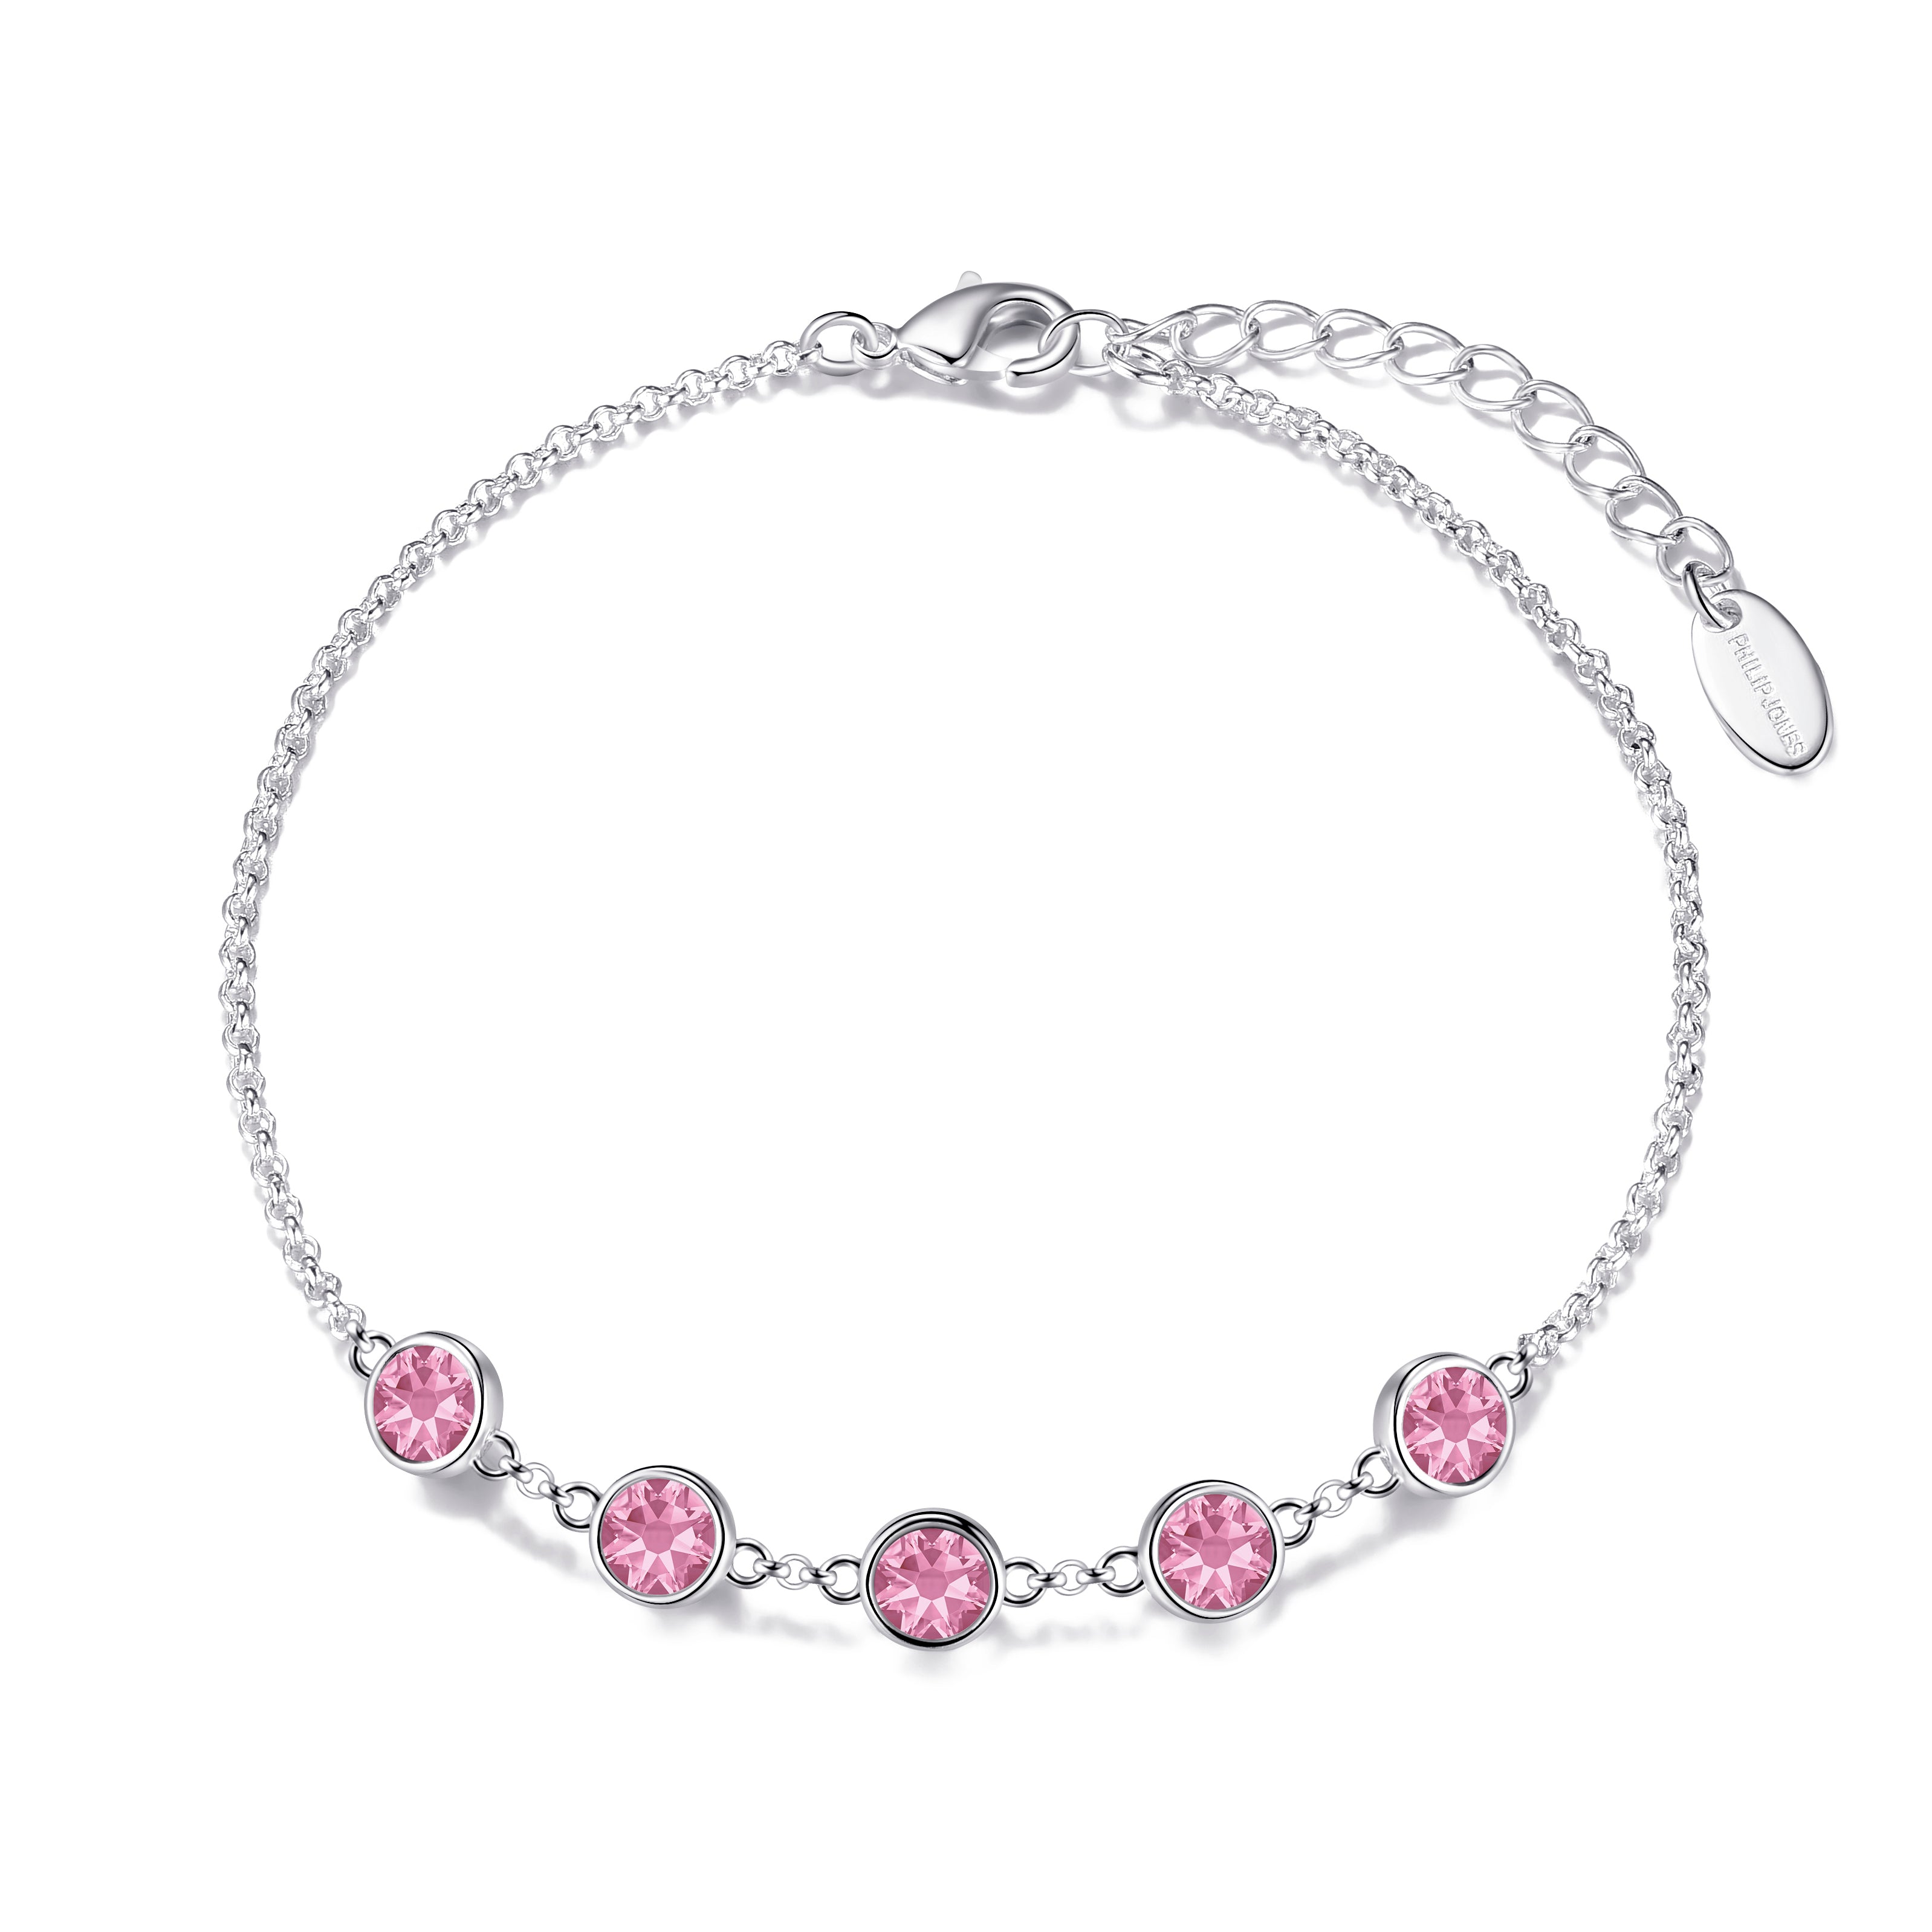 Pink Crystal Chain Bracelet Created with Zircondia® Crystals by Philip Jones Jewellery